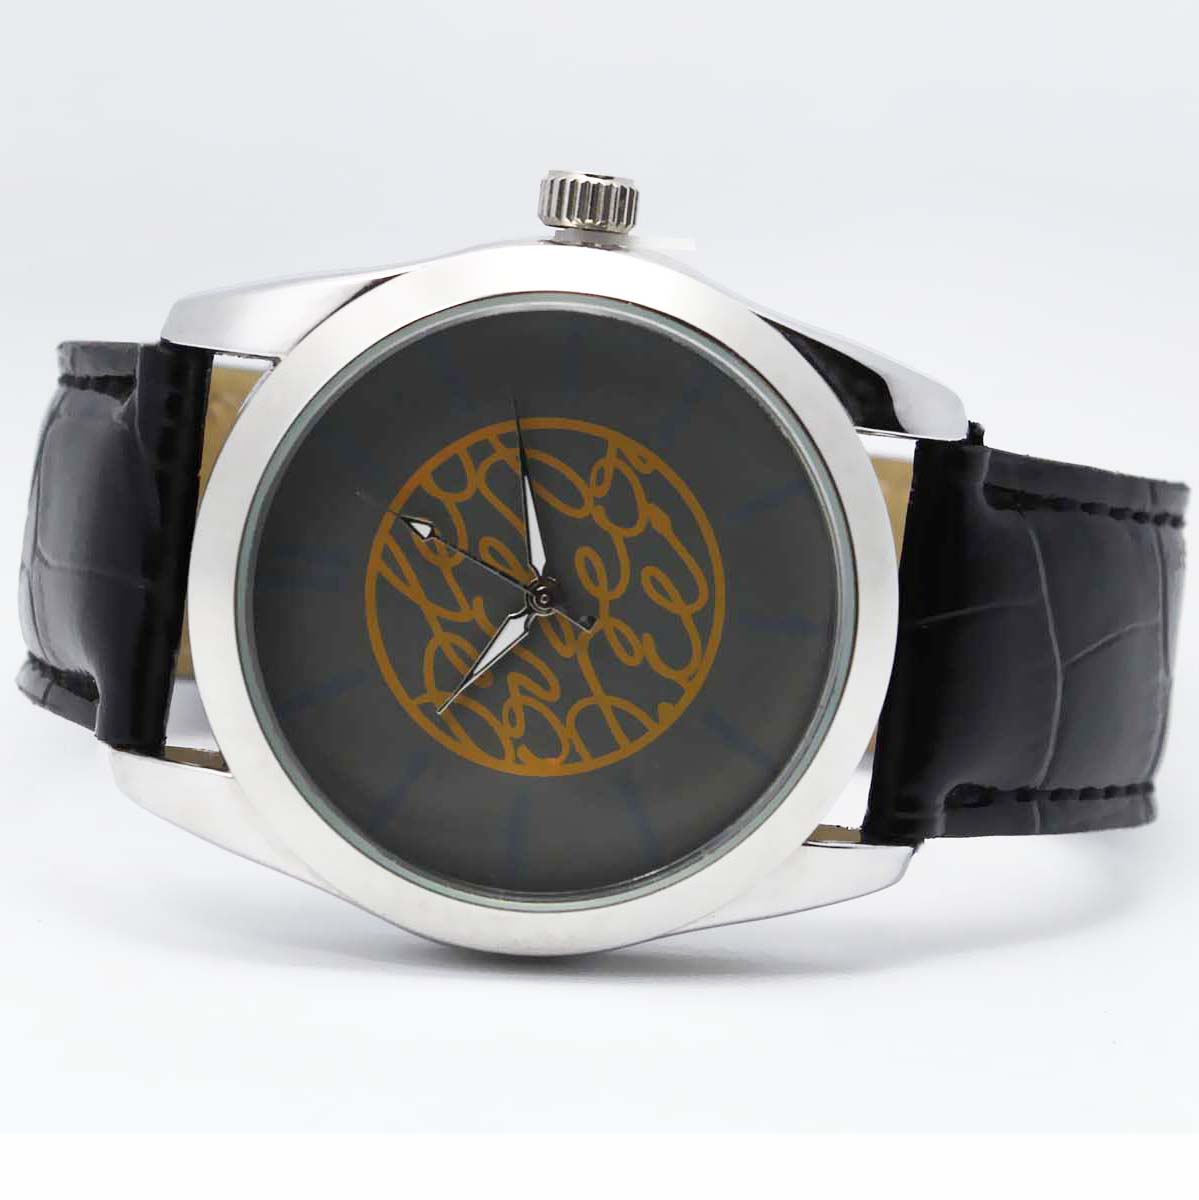 #02124Men's wristwatch quartz analog leather strap watch